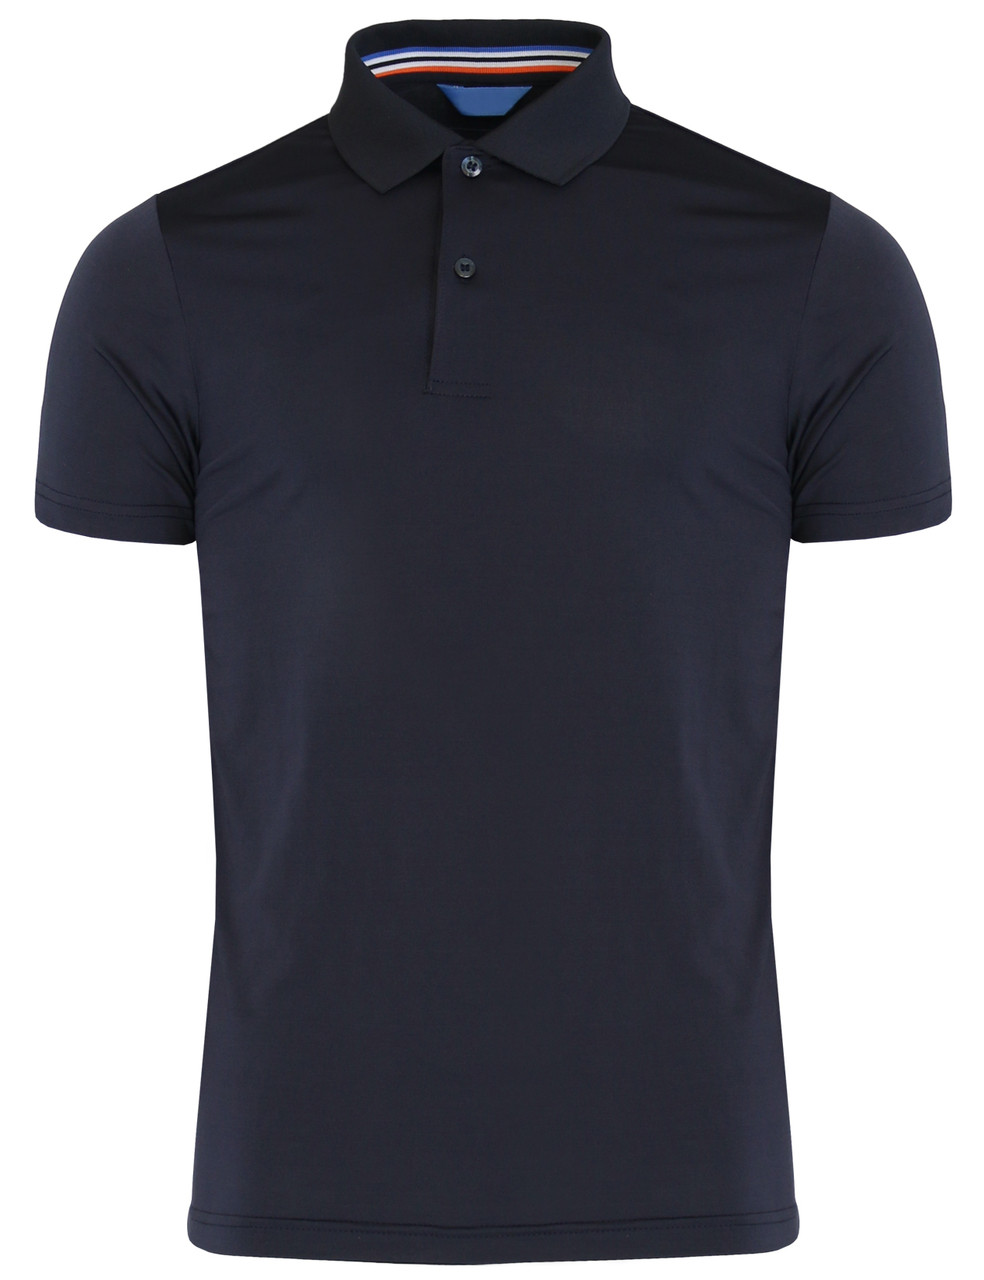 Short Sleeve Dri Fit Spandex Polo Shirt-Unisex